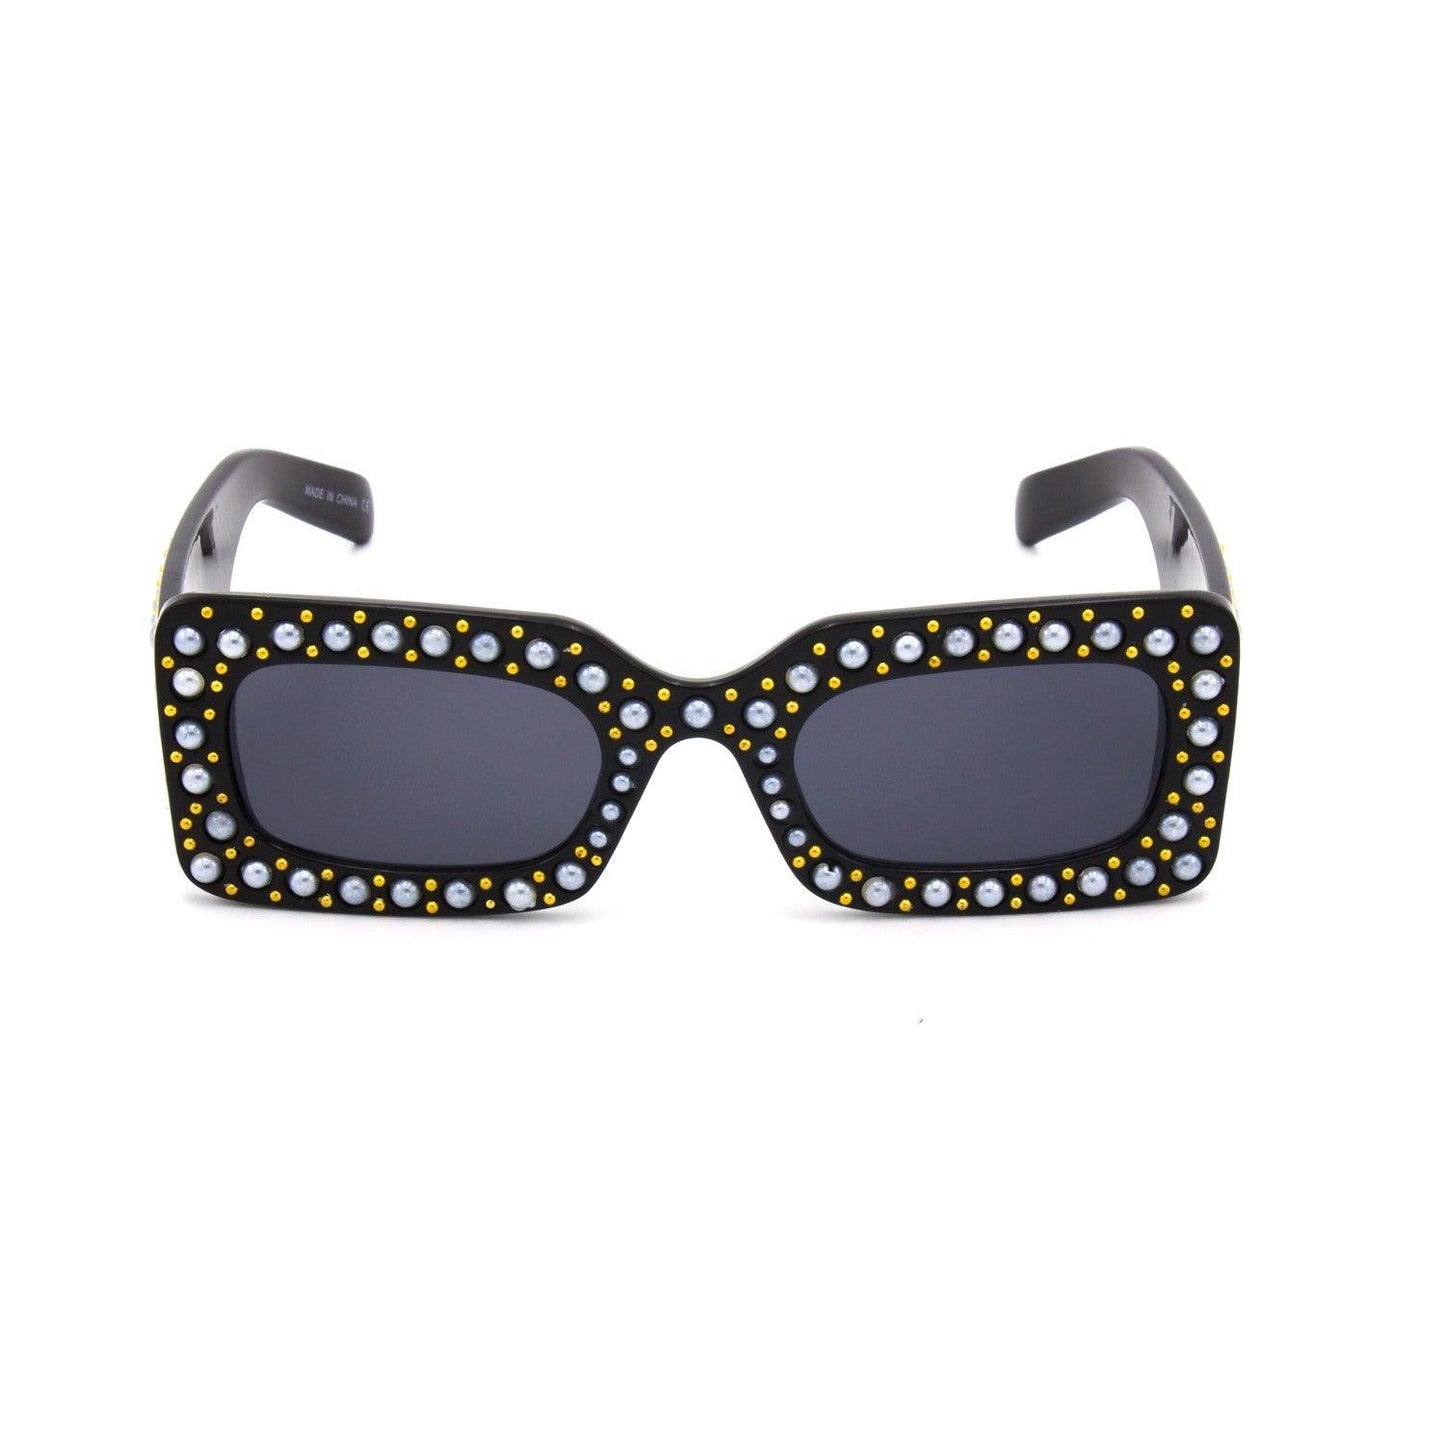 "Lifestyle" Pearl Design Sunglasses - Weekend Shade Sunglasses